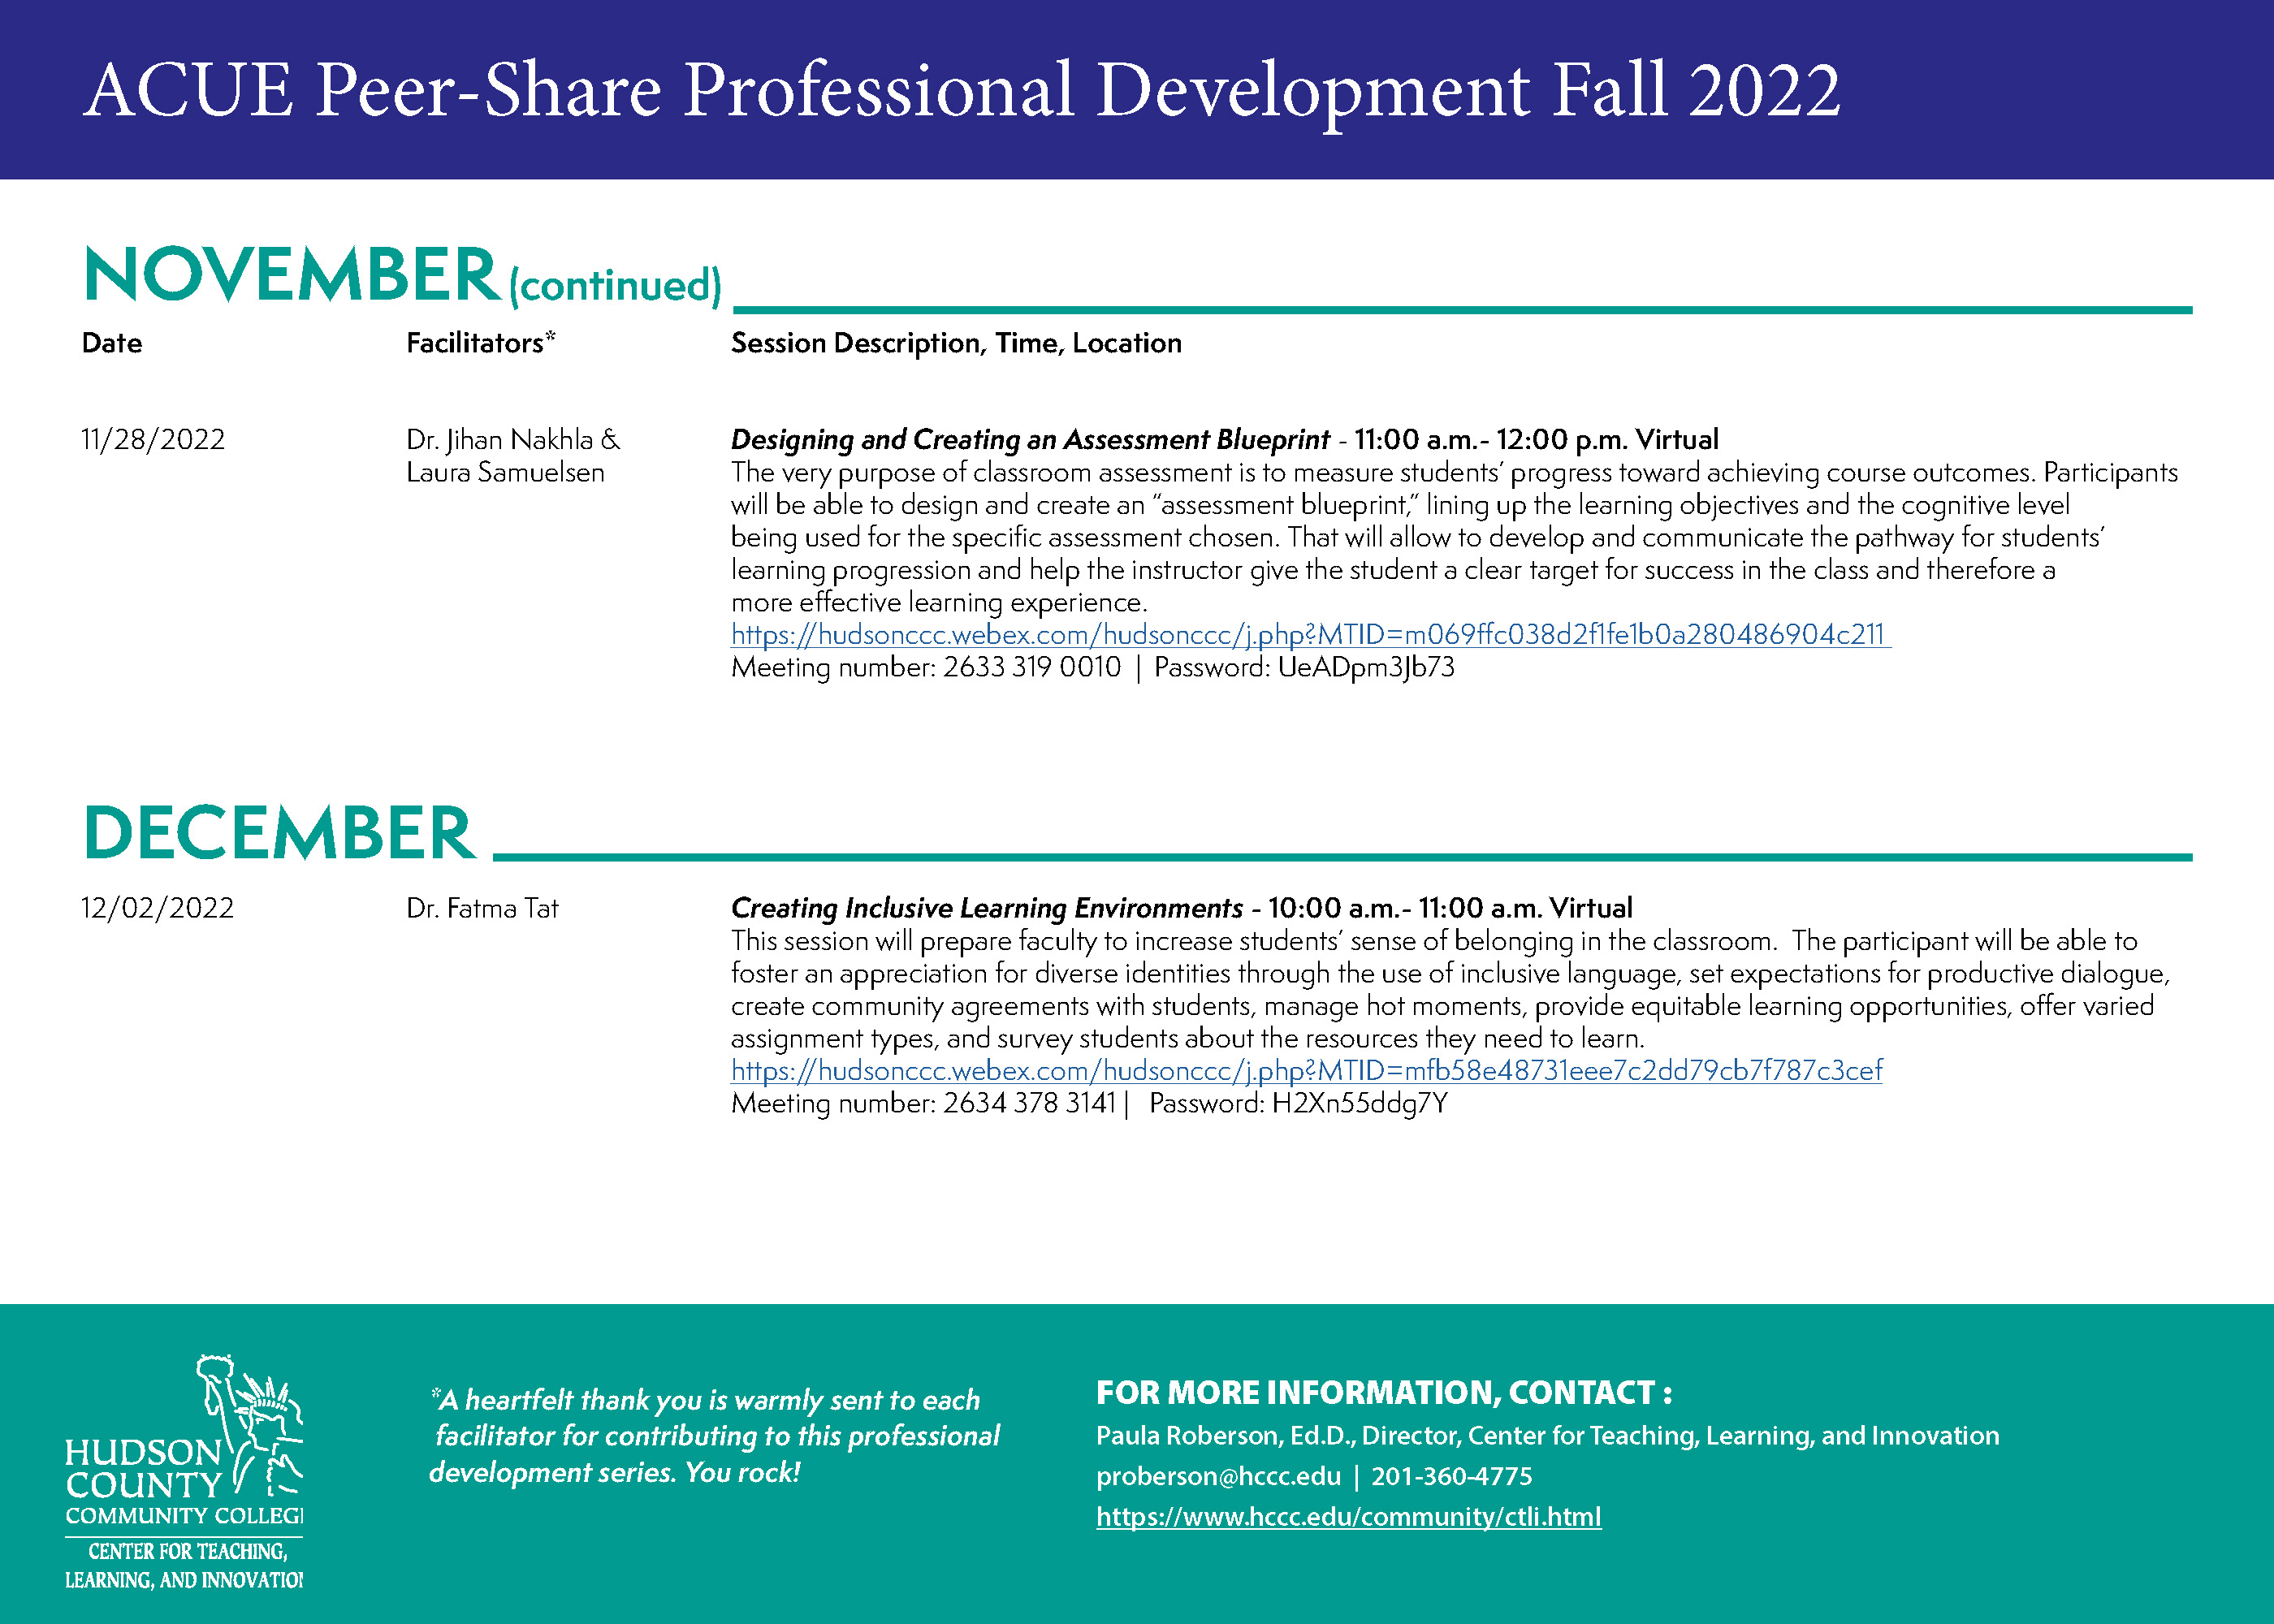 Desarrollo profesional ACUE Peer-Share Otoño 2022 - Calendario de diciembre